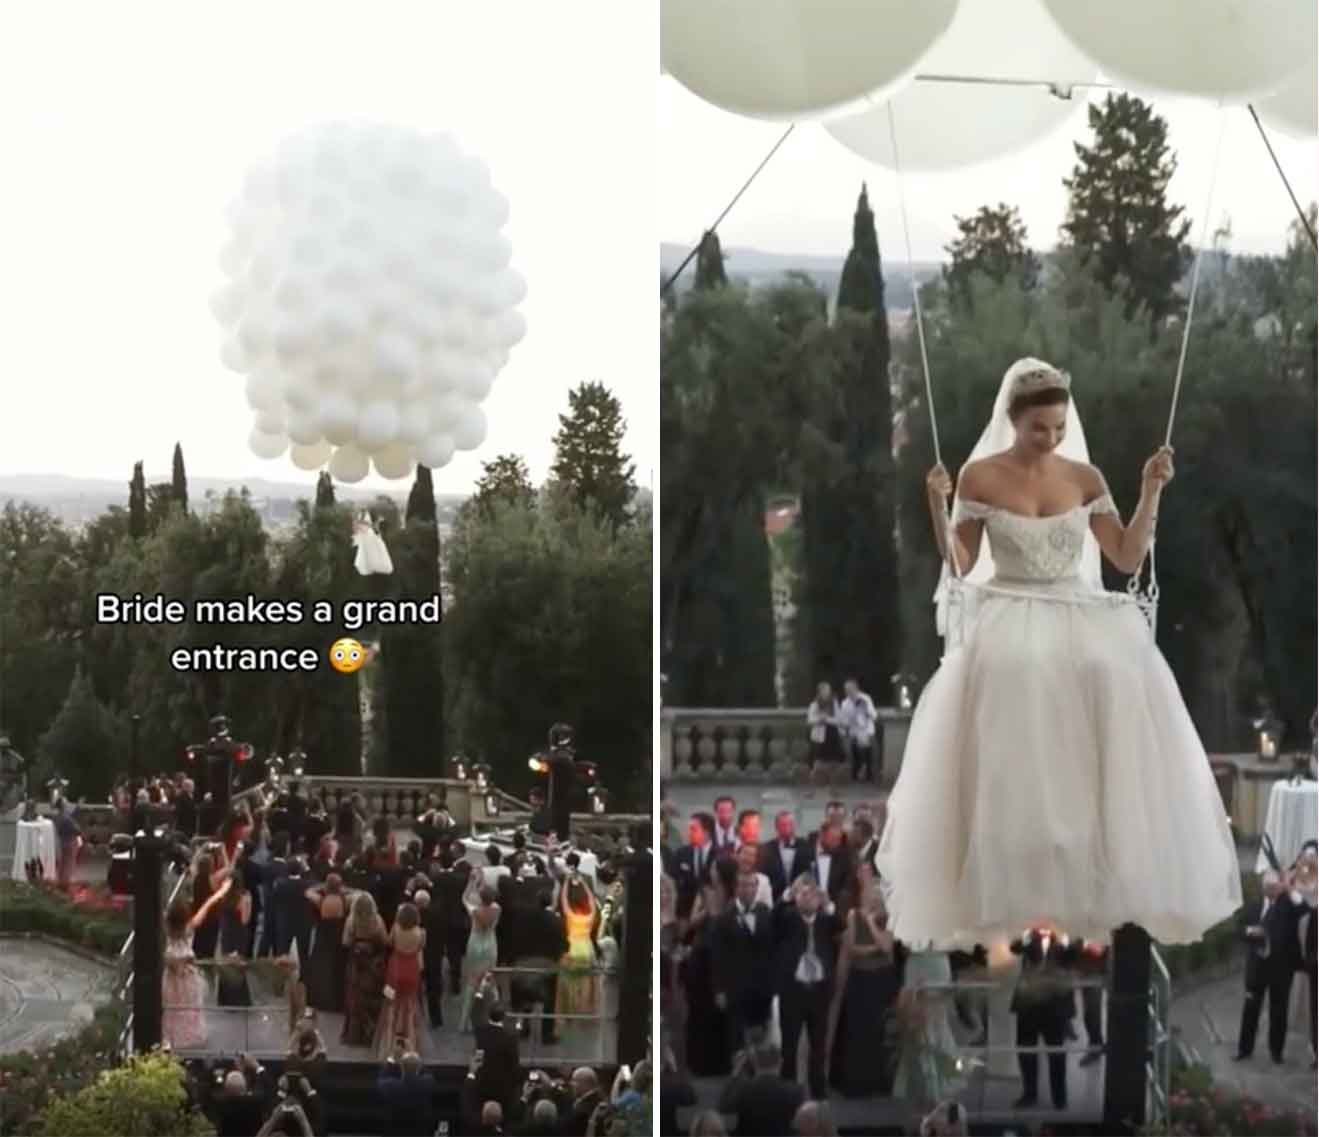 performance - Bride makes a grand entrance